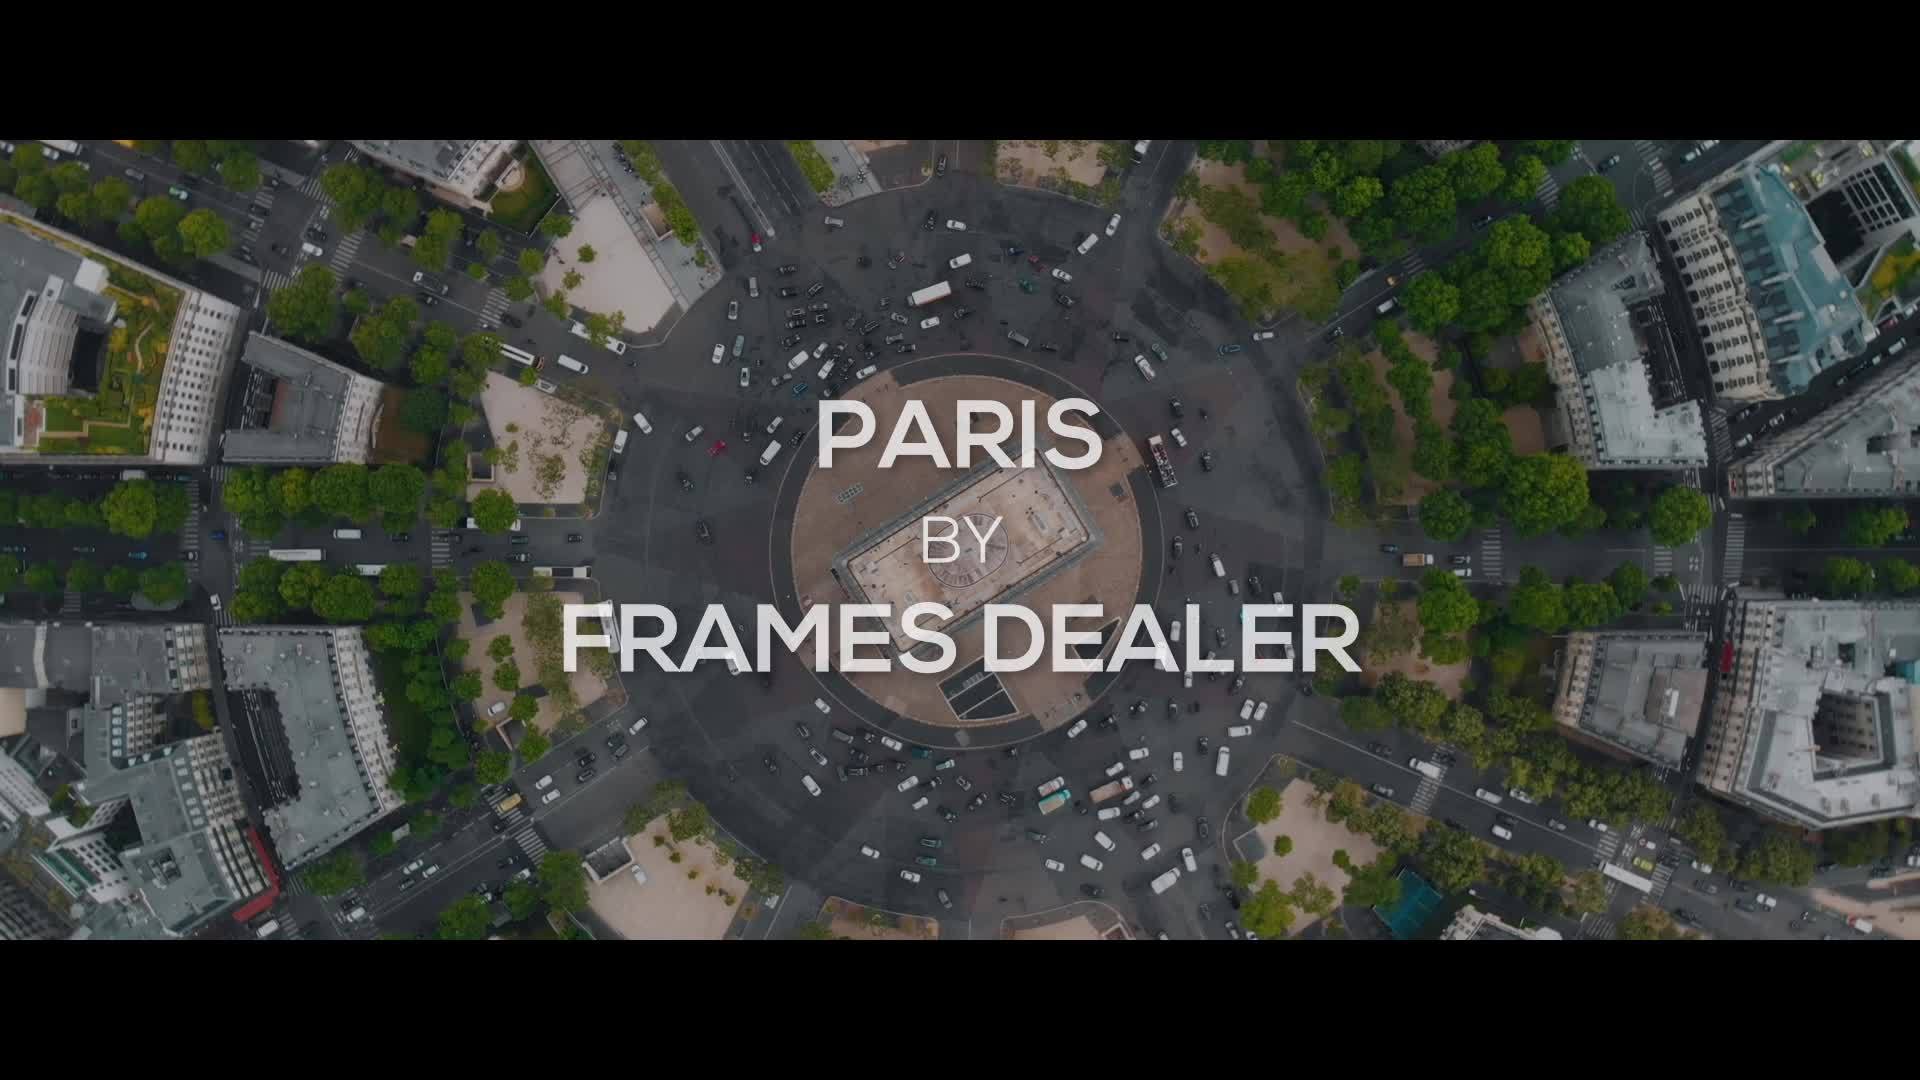 Frames Dealer x PARIS